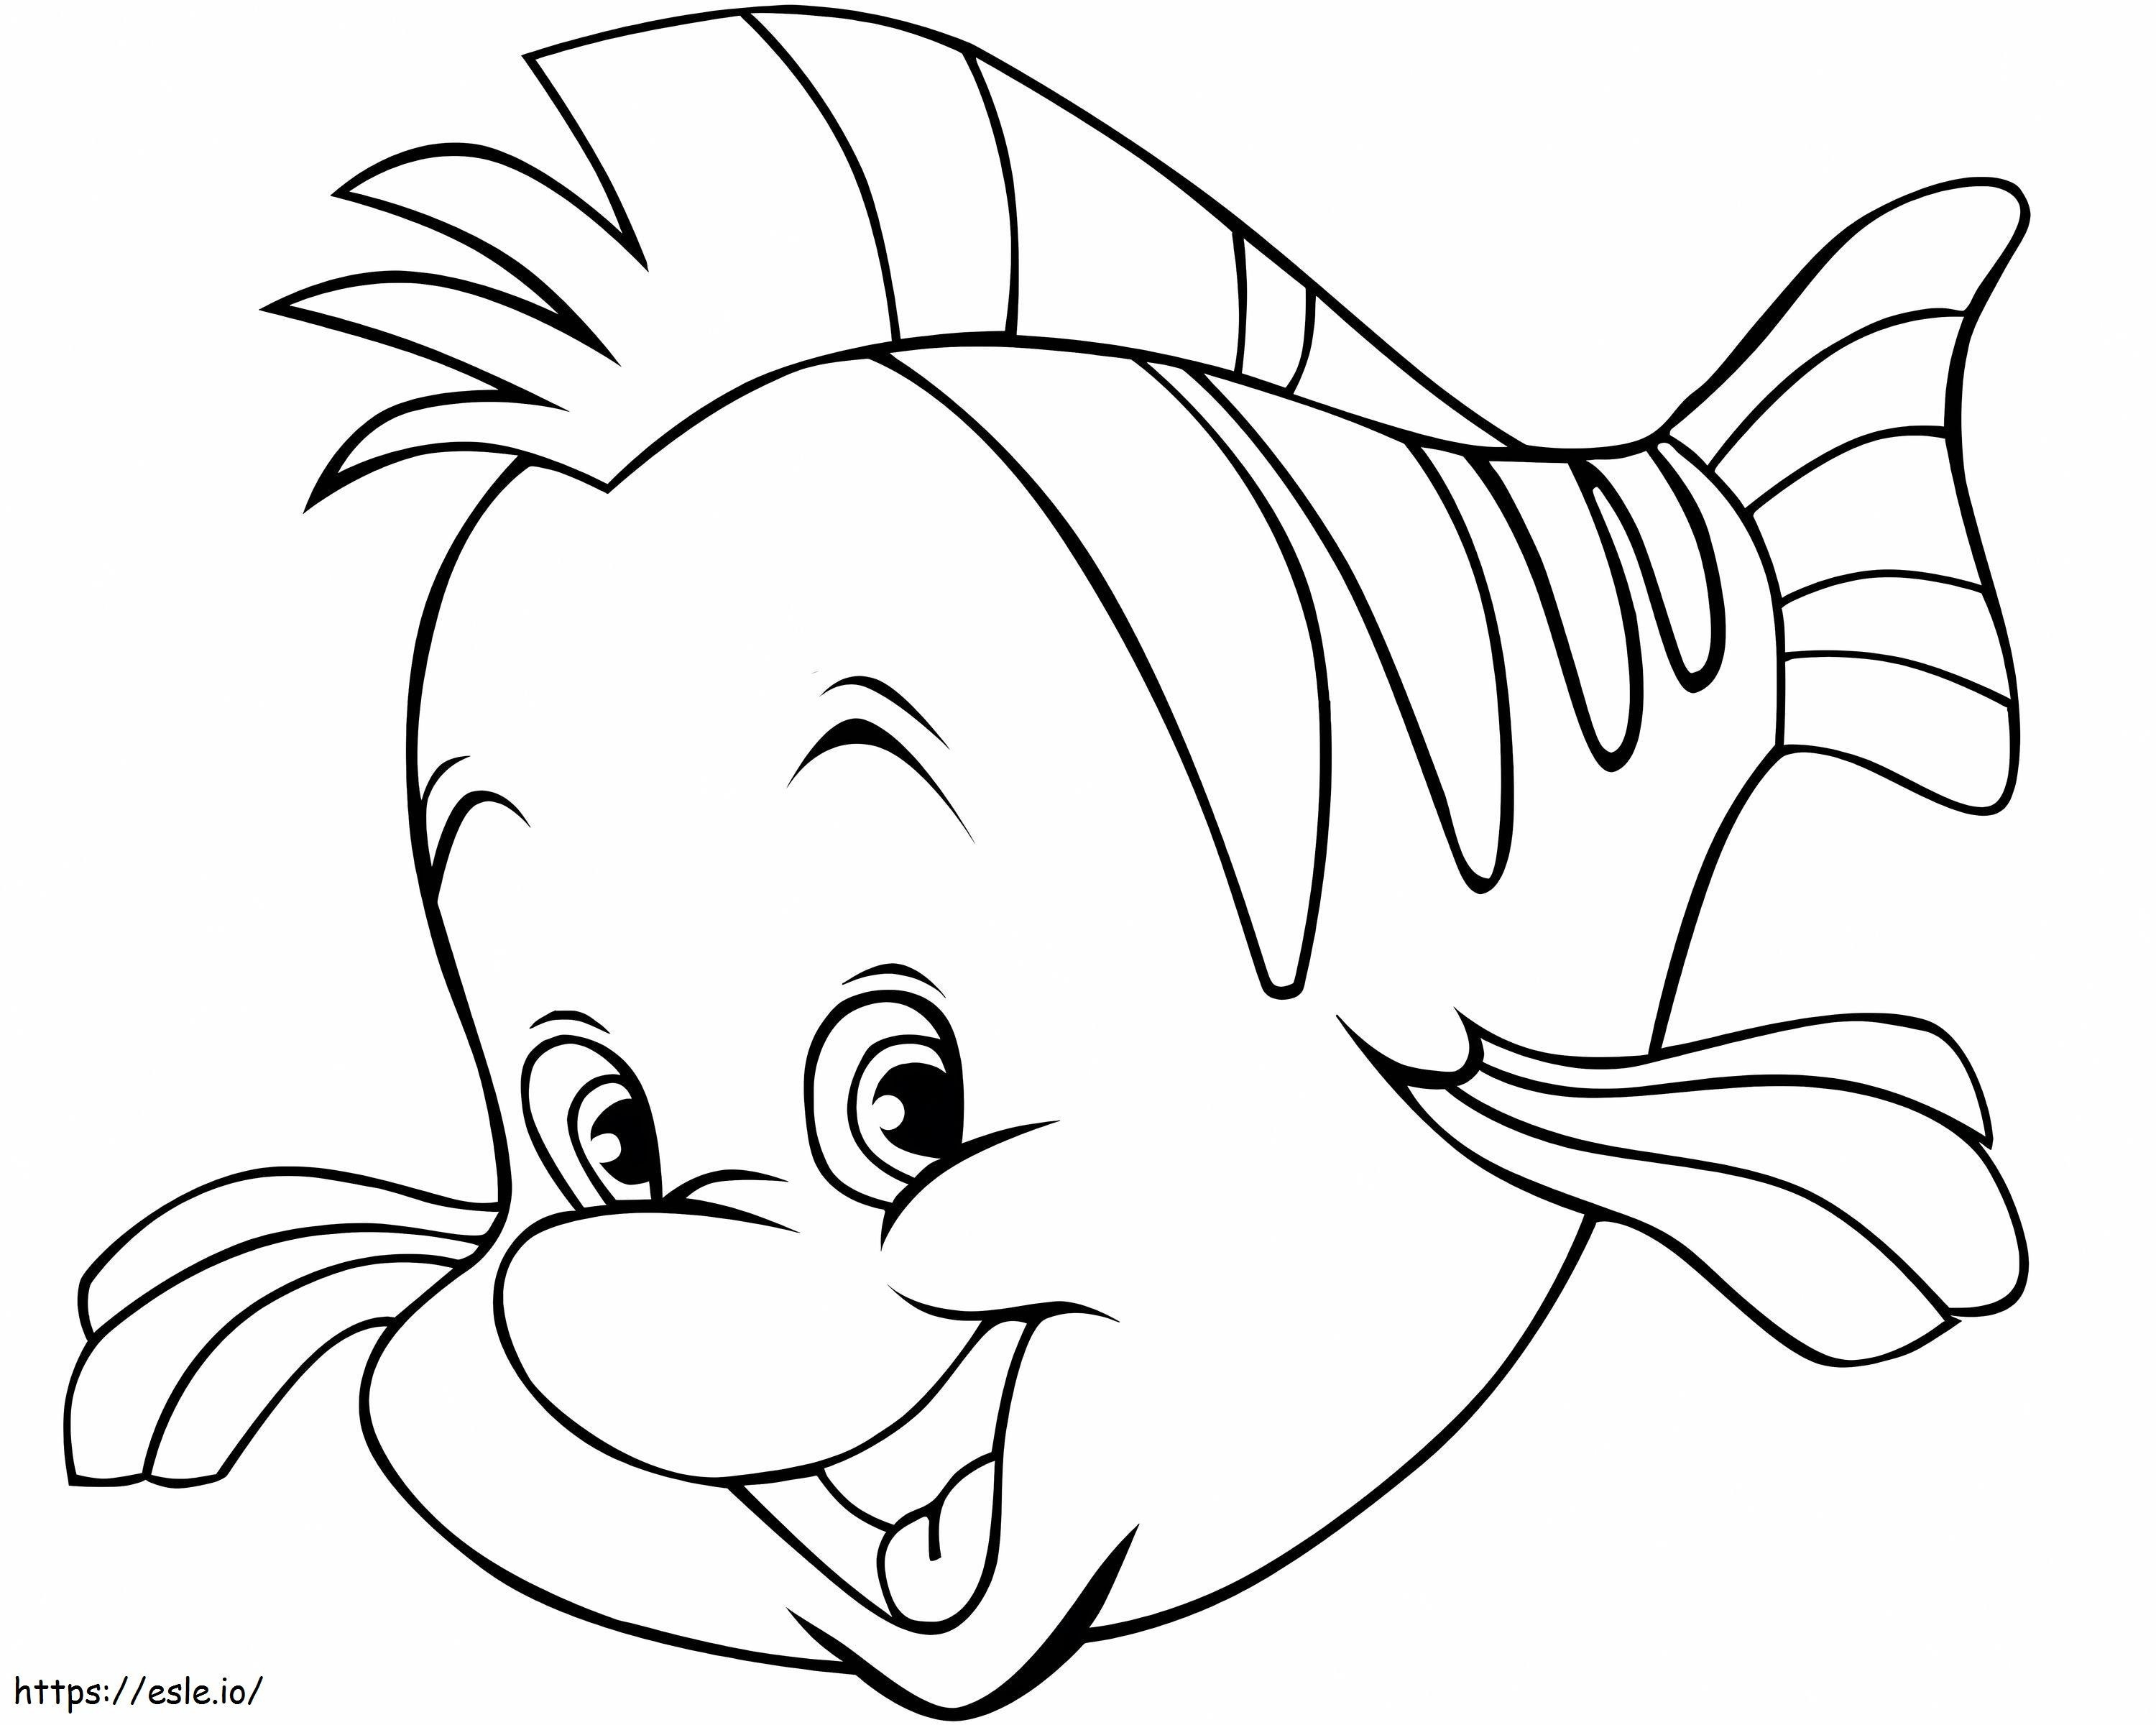 Funny Cartoon Fish coloring page